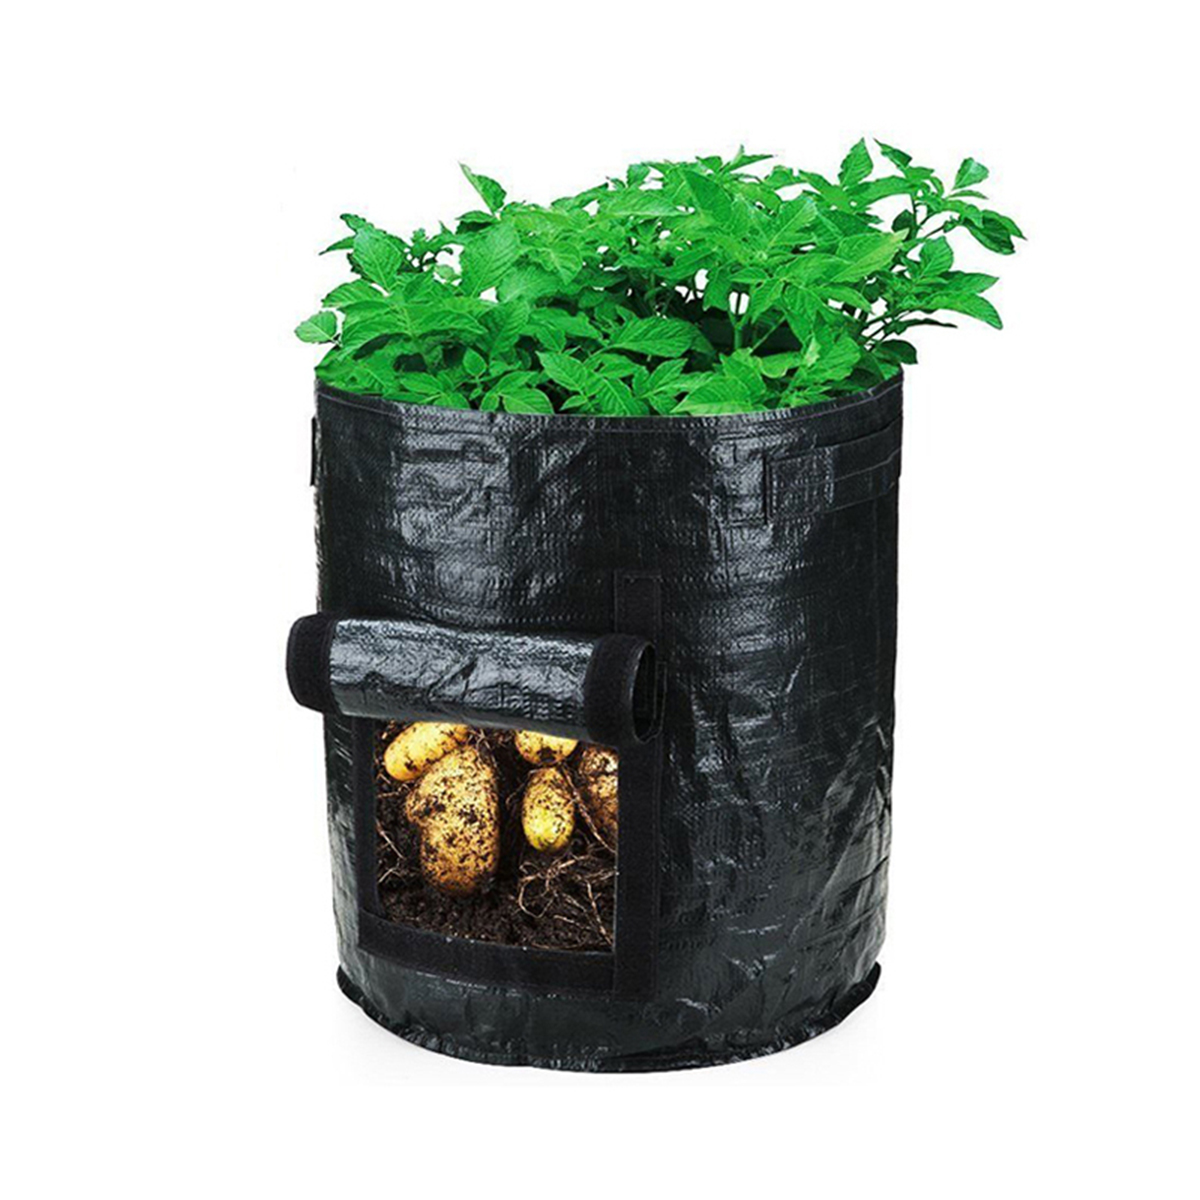 Potato-Planting-Bag-Planter-Grow-Bag-Growing-Pot-Vegetable-Container-1702555-2